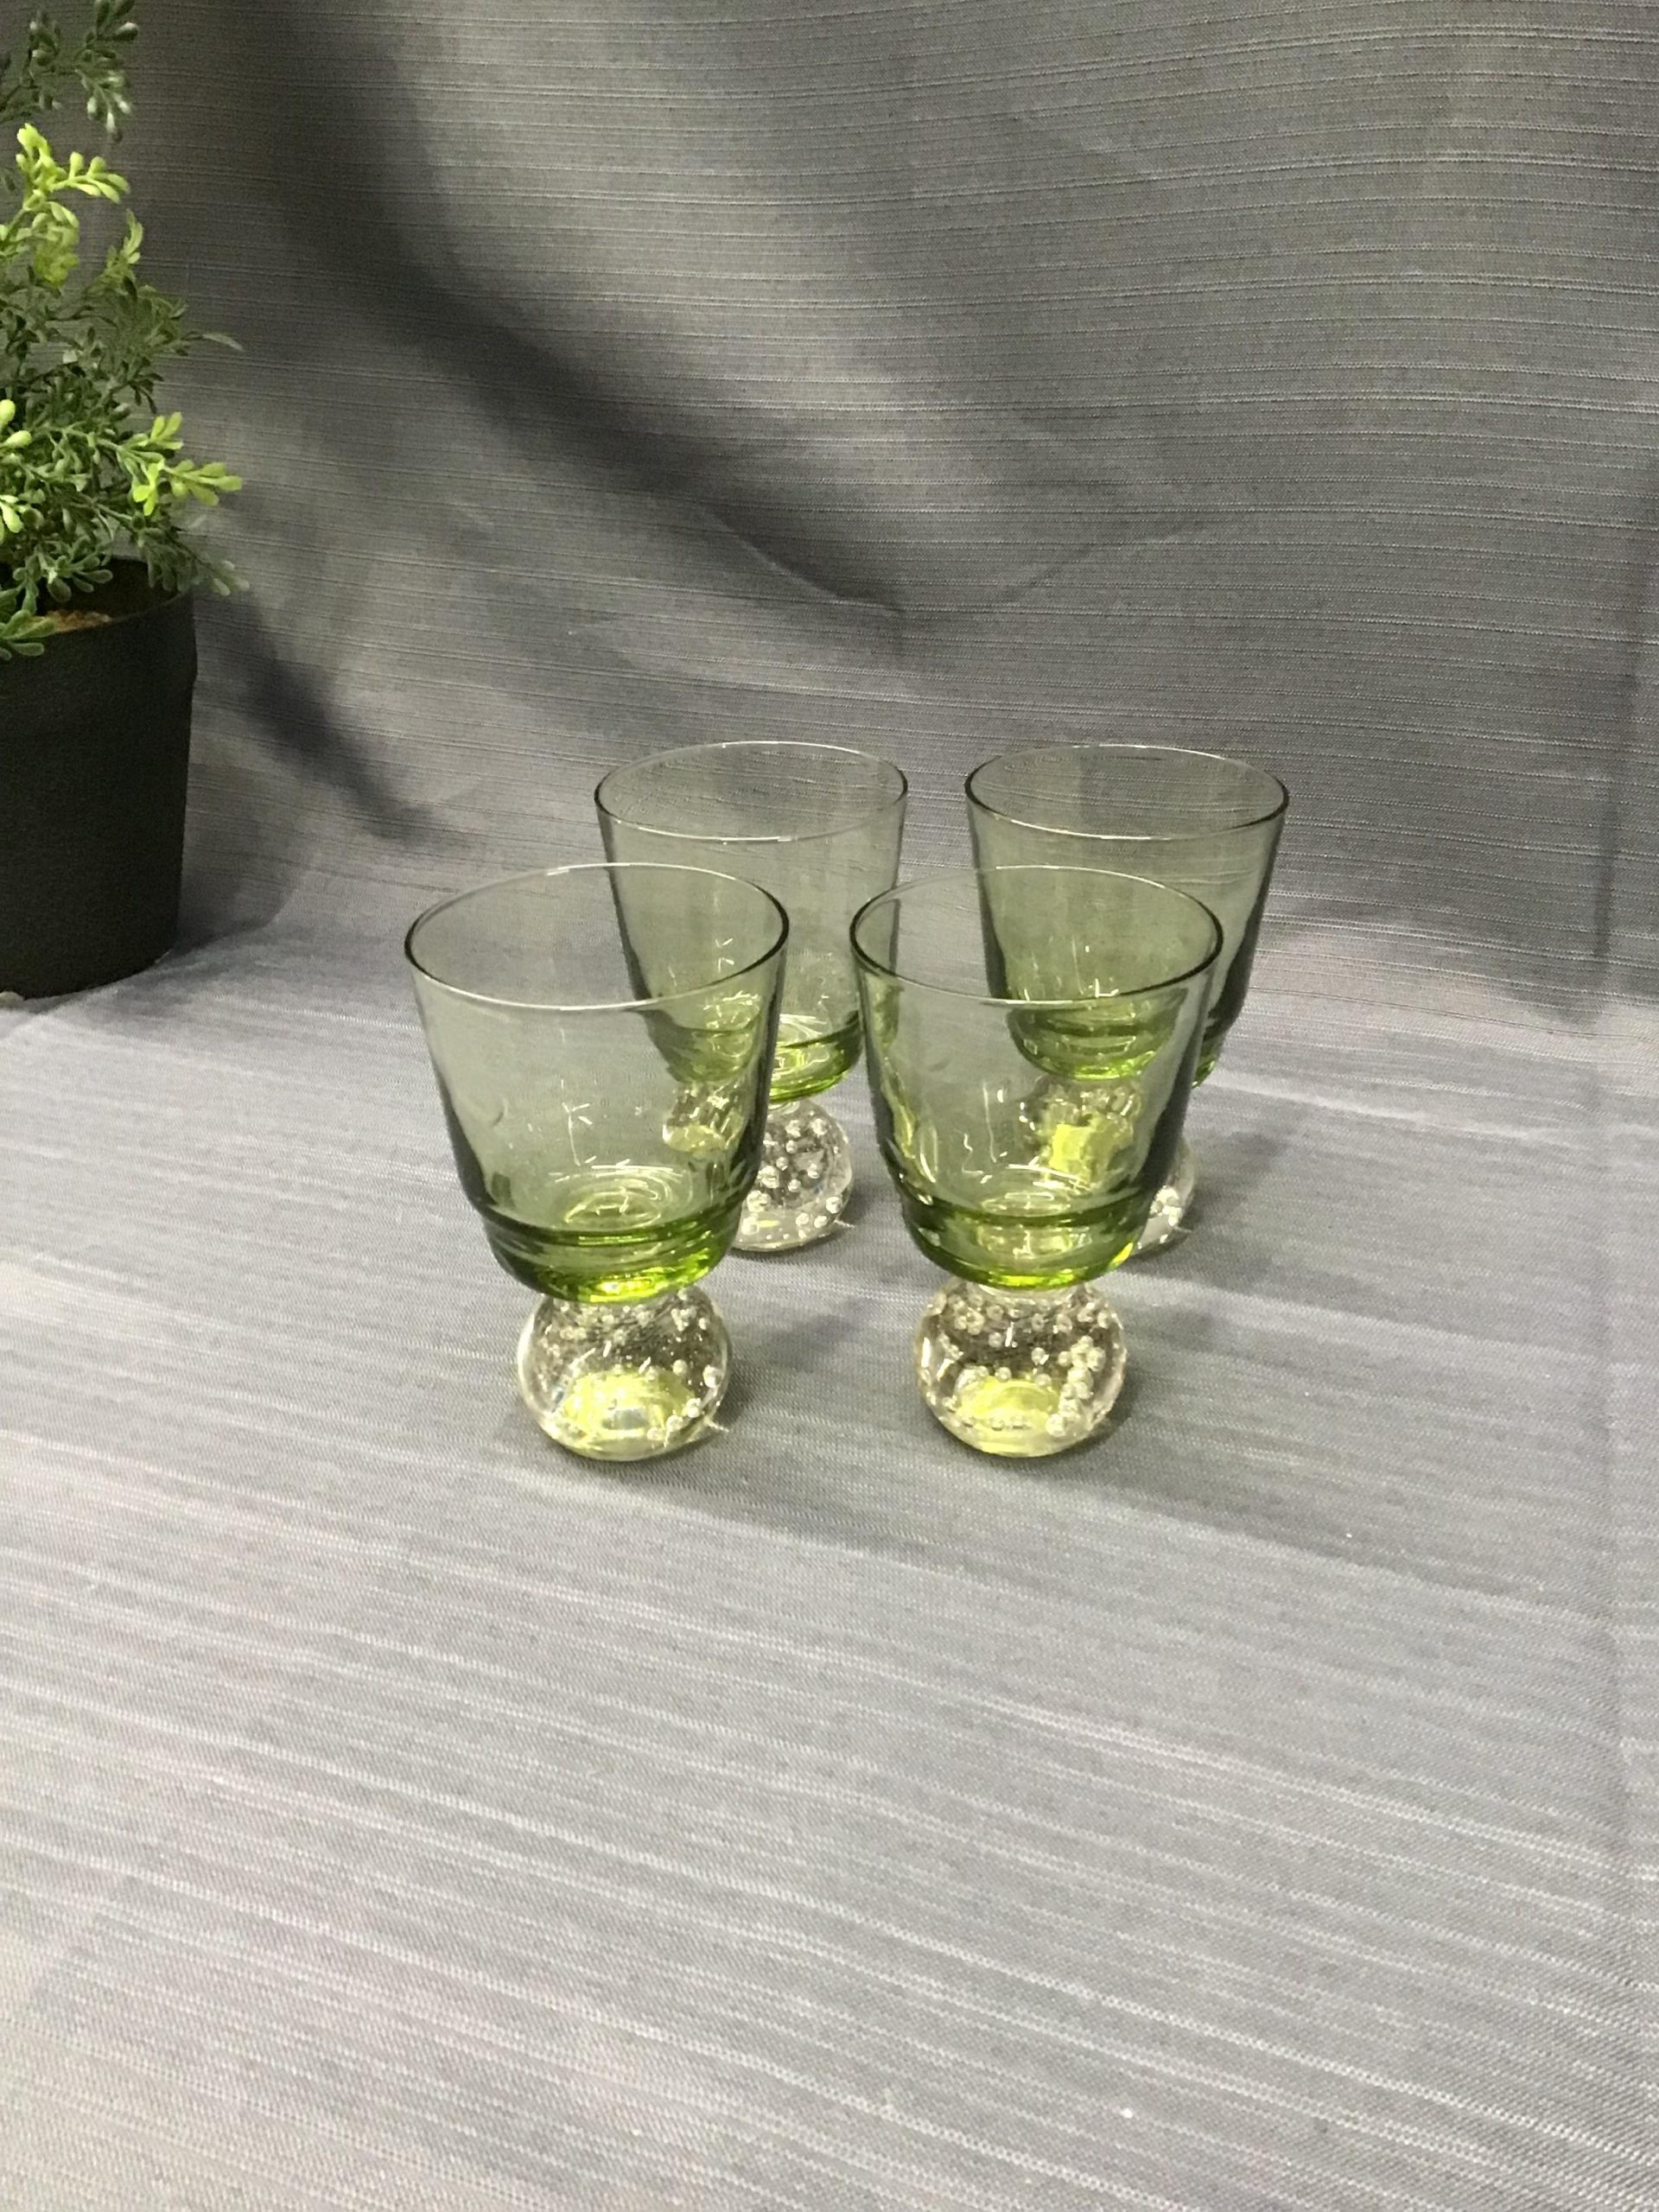 Serax Green Eternal Snow 4″ Glasses (set of 4+1) – Say Good BUY $26.60